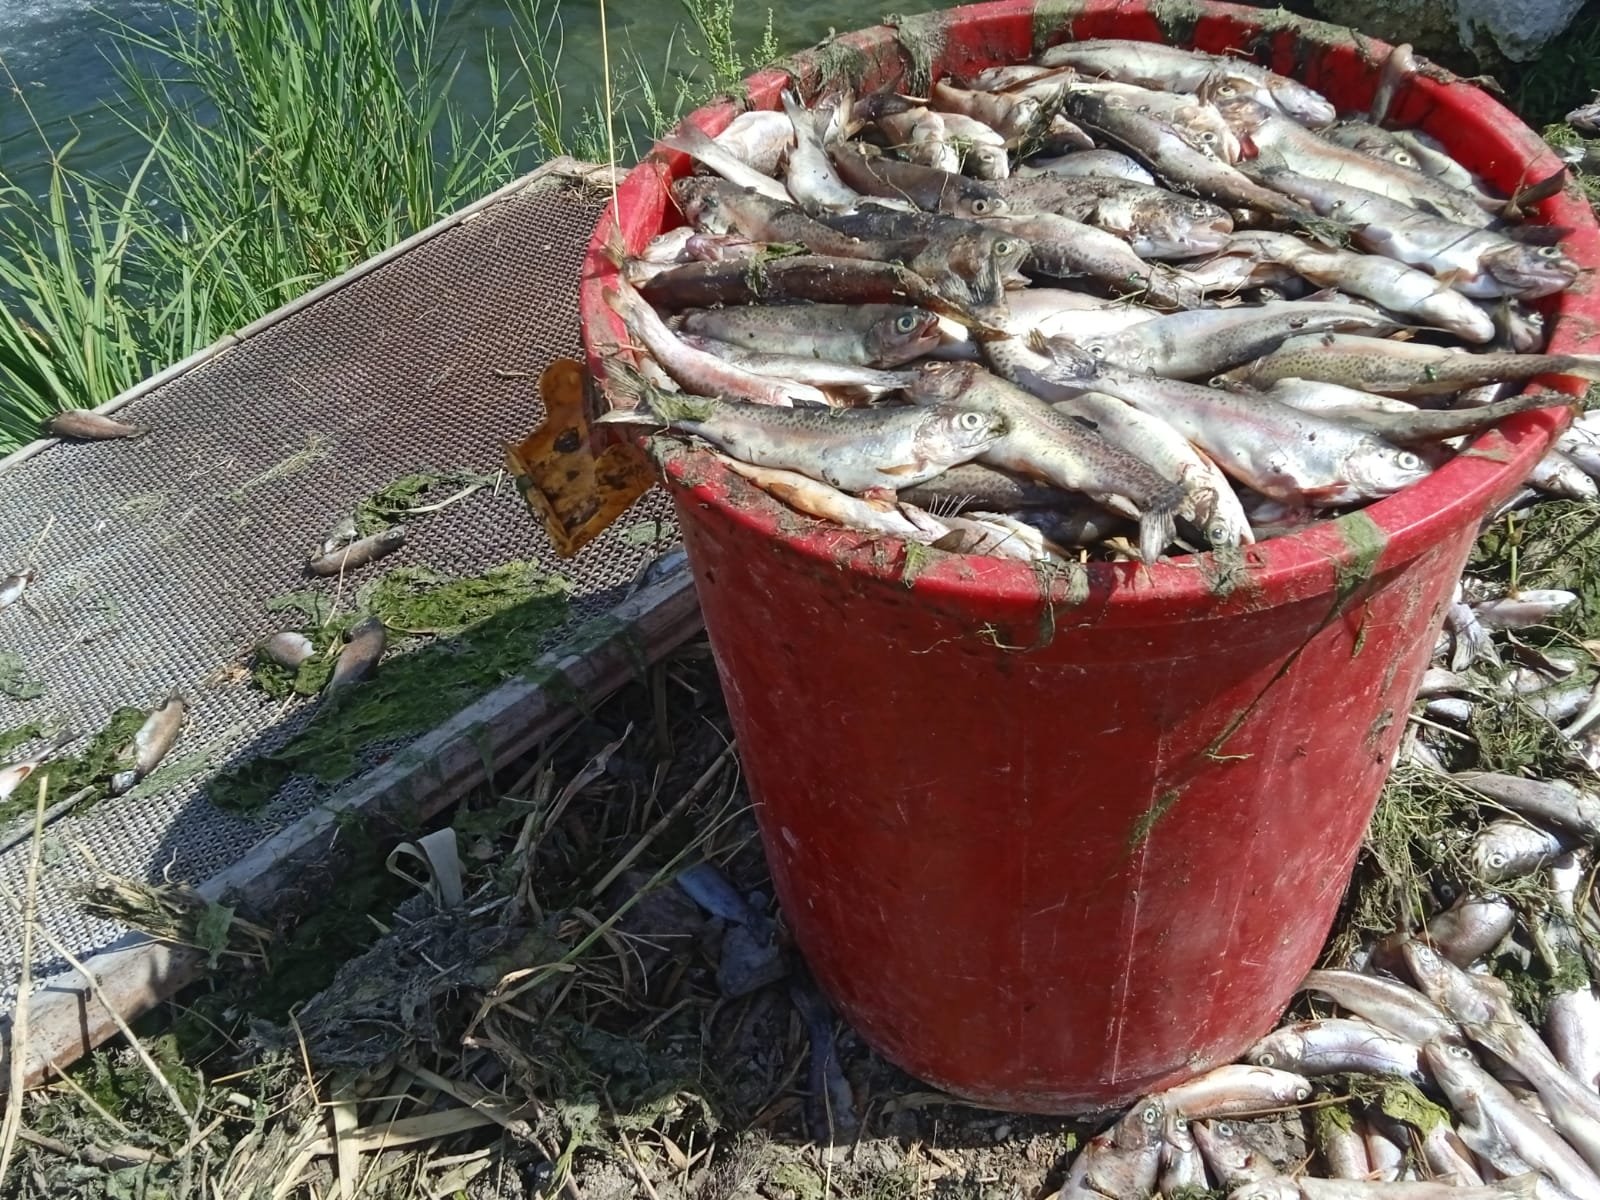 Some 325 tons of trout die from oxygen deprivation in Türkiye's Van